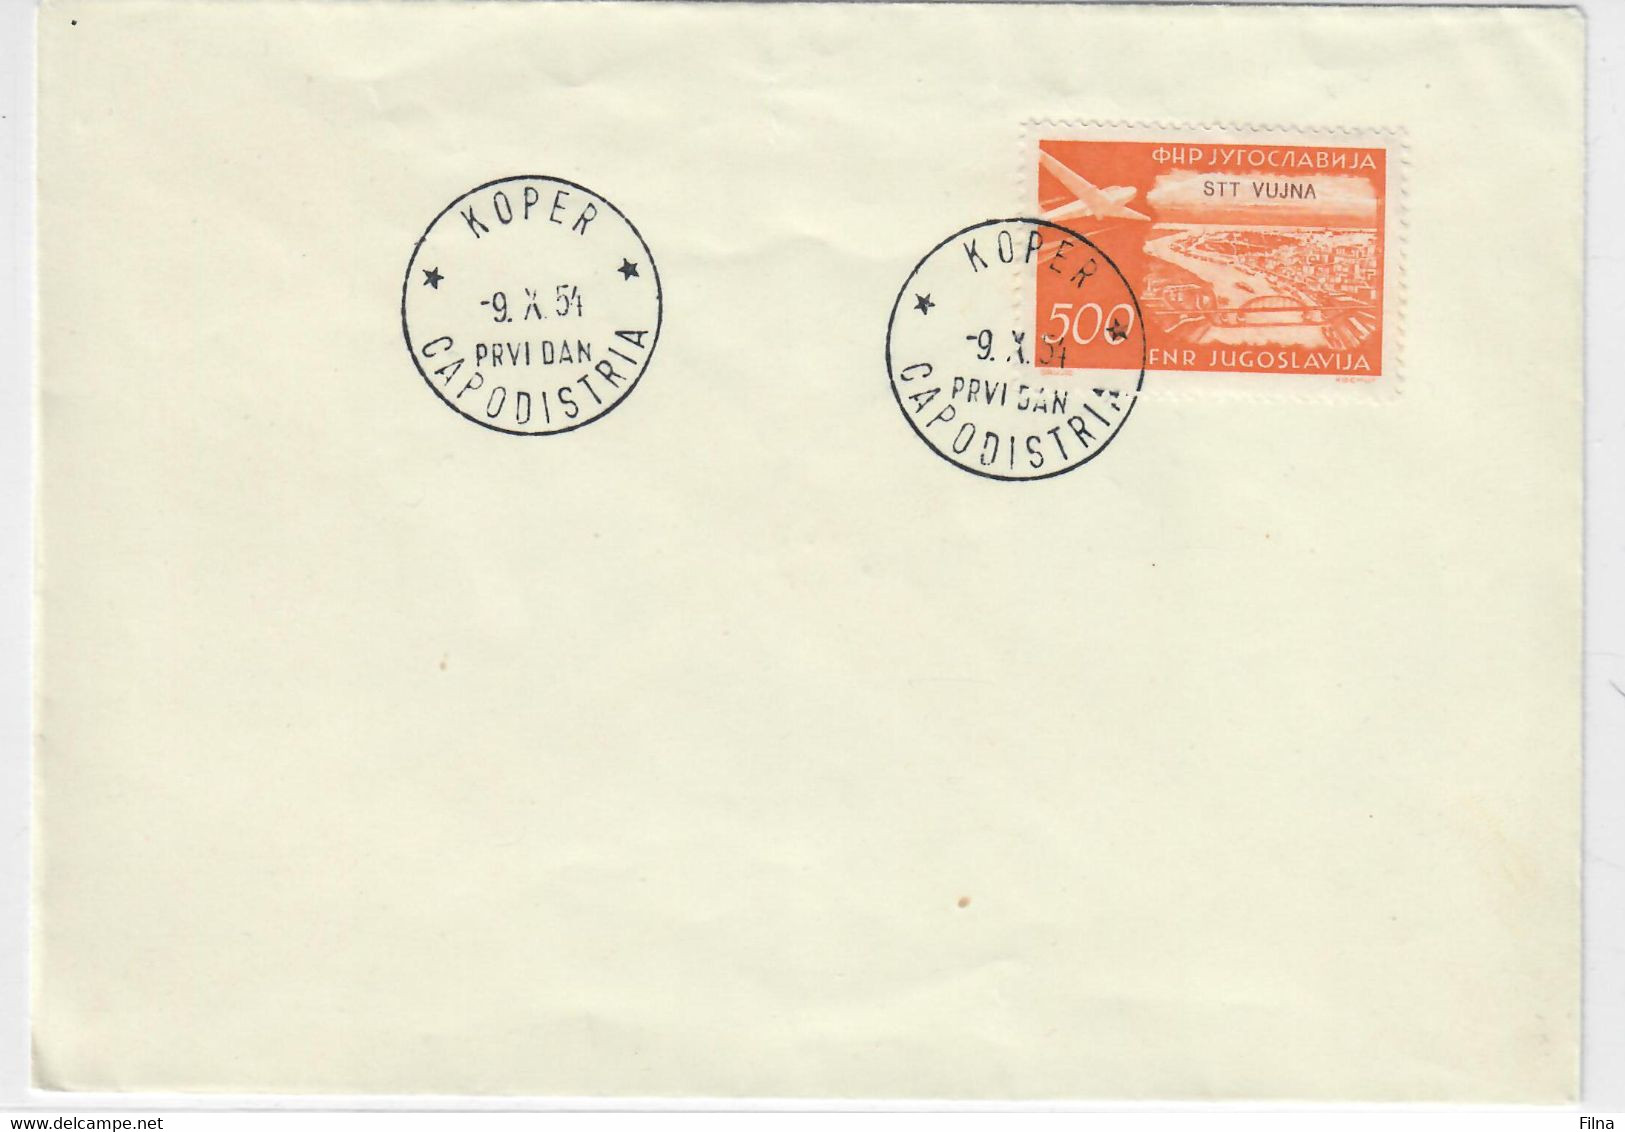 TRIESTE B VUJA 1954  - POSTA AEREA 500 D. ARANCIO -  FDC - Poststempel